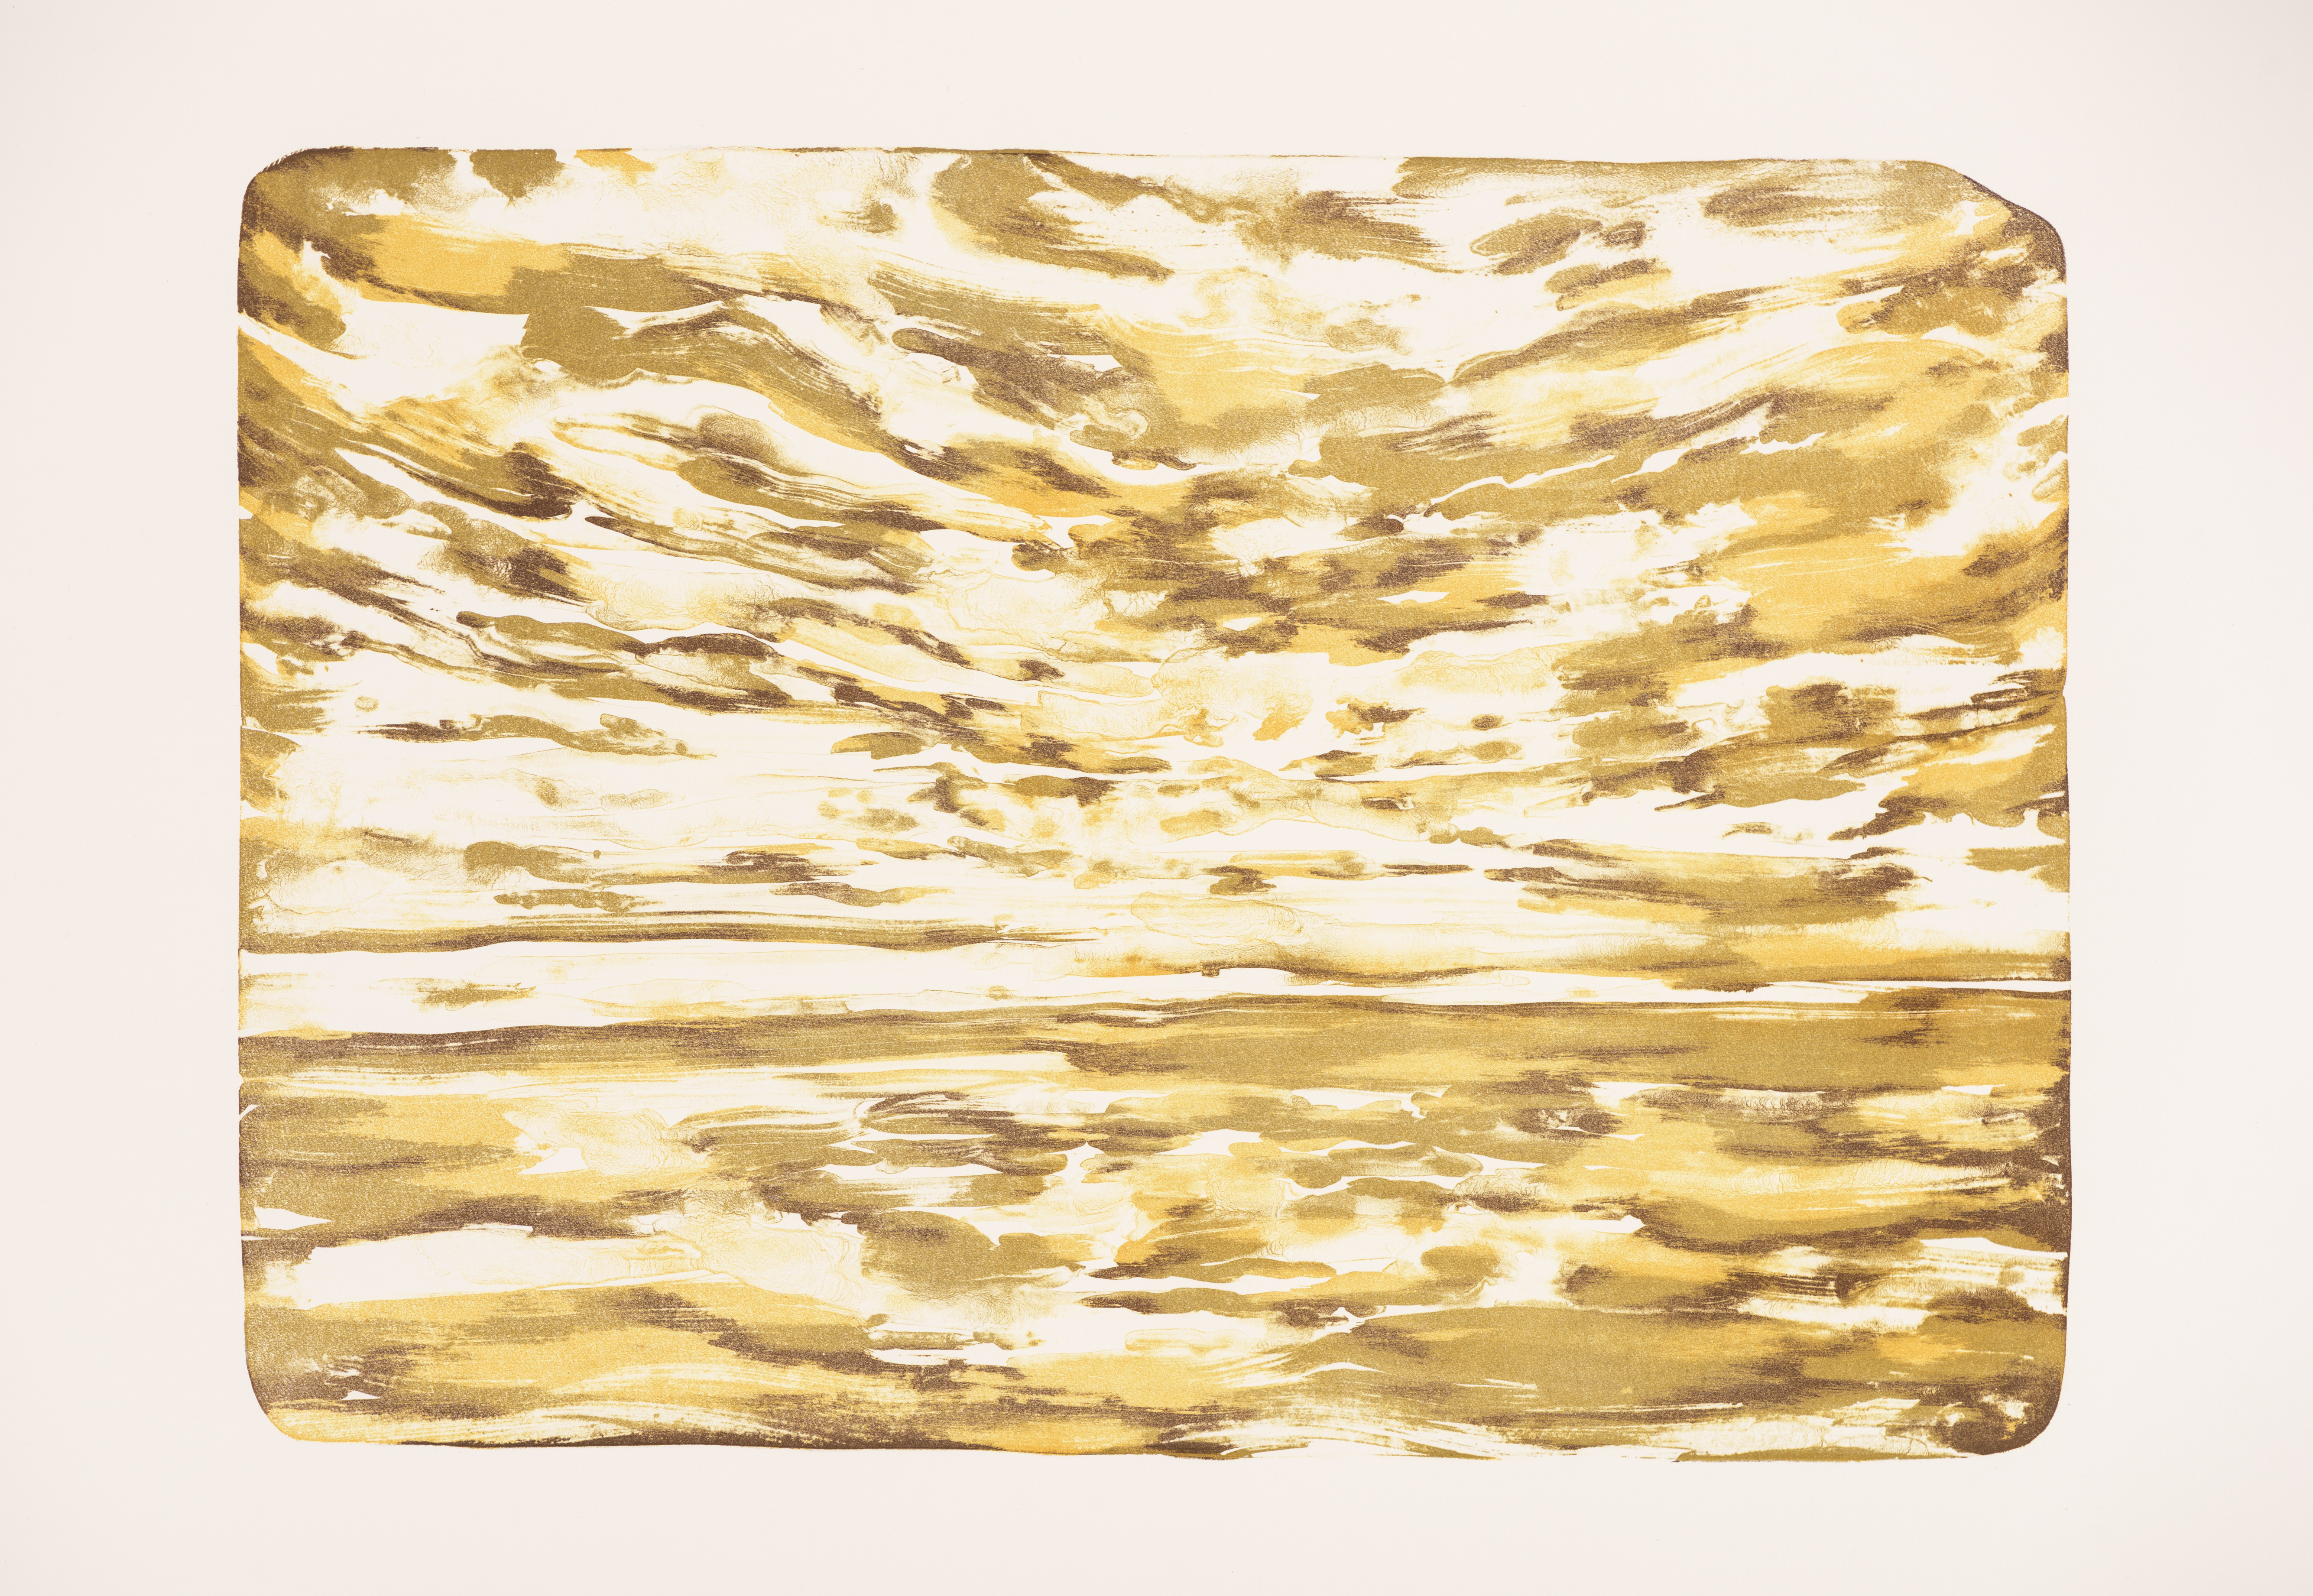 "Goldenen Sonnenuntergang" 59 x 41,5 cm. lithography, 3 colours (2016)